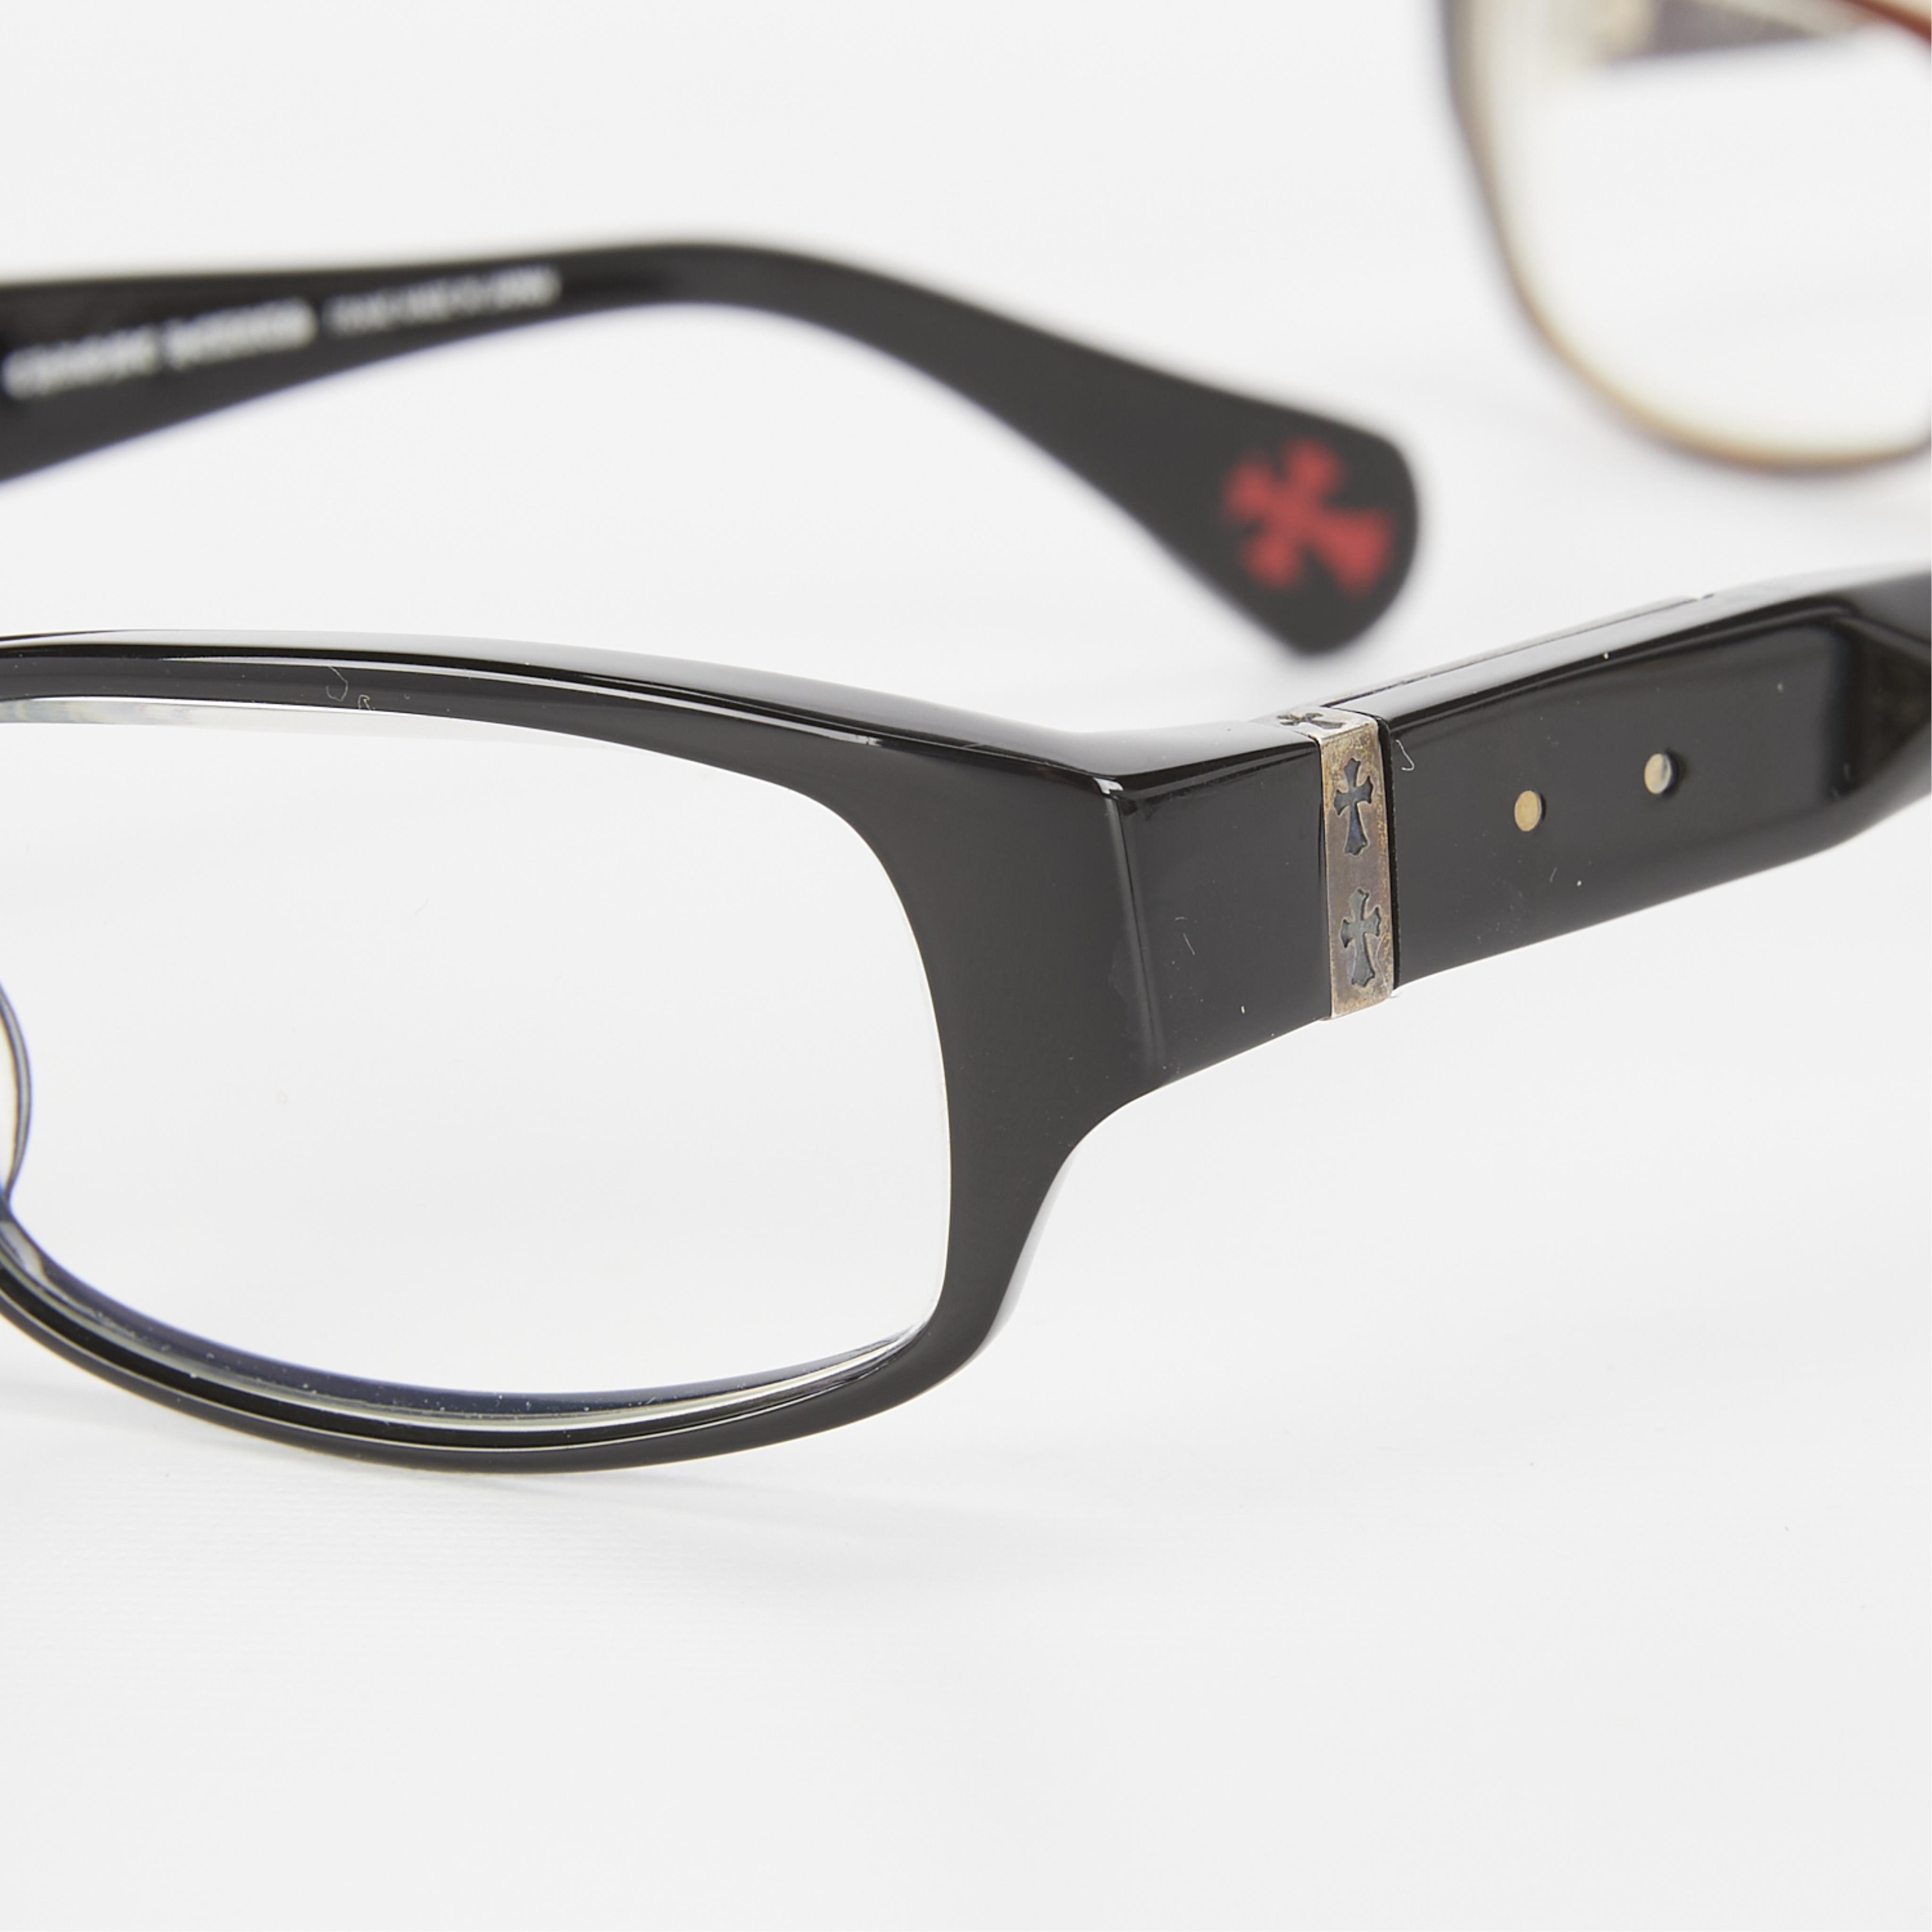 Grp of 6 Chrome Hearts Eyeglasses - Image 8 of 12